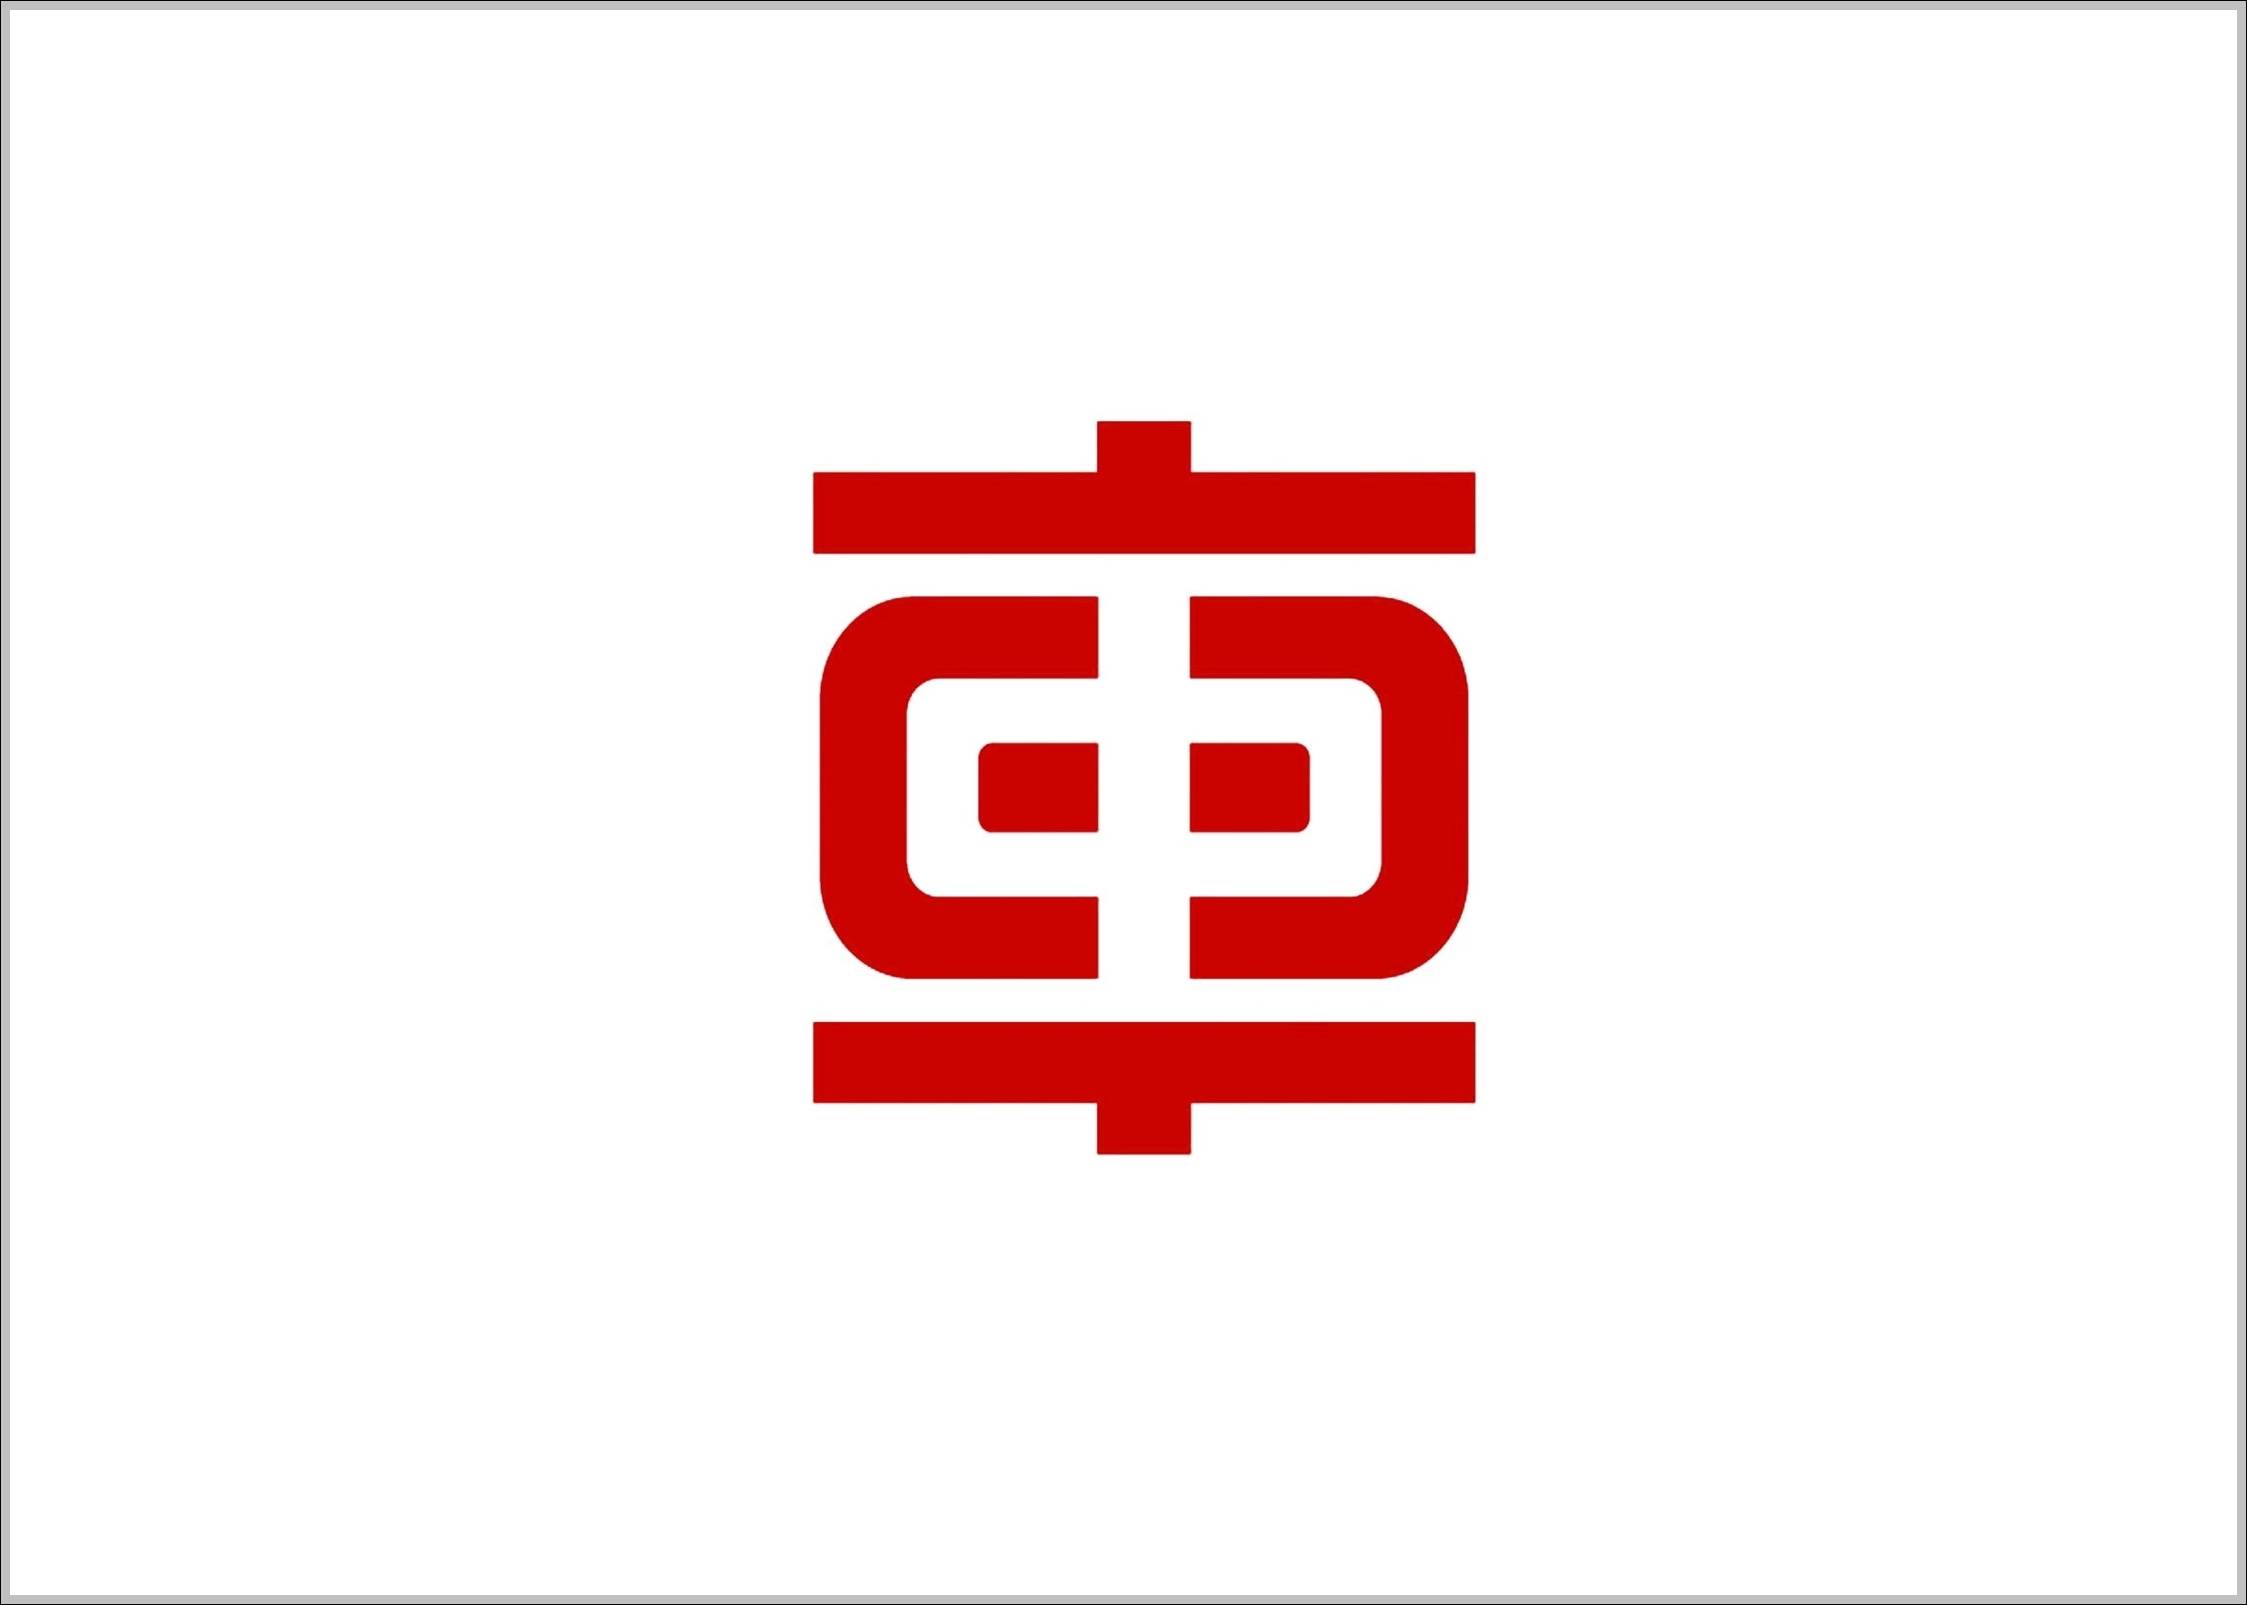 China CRRC logo